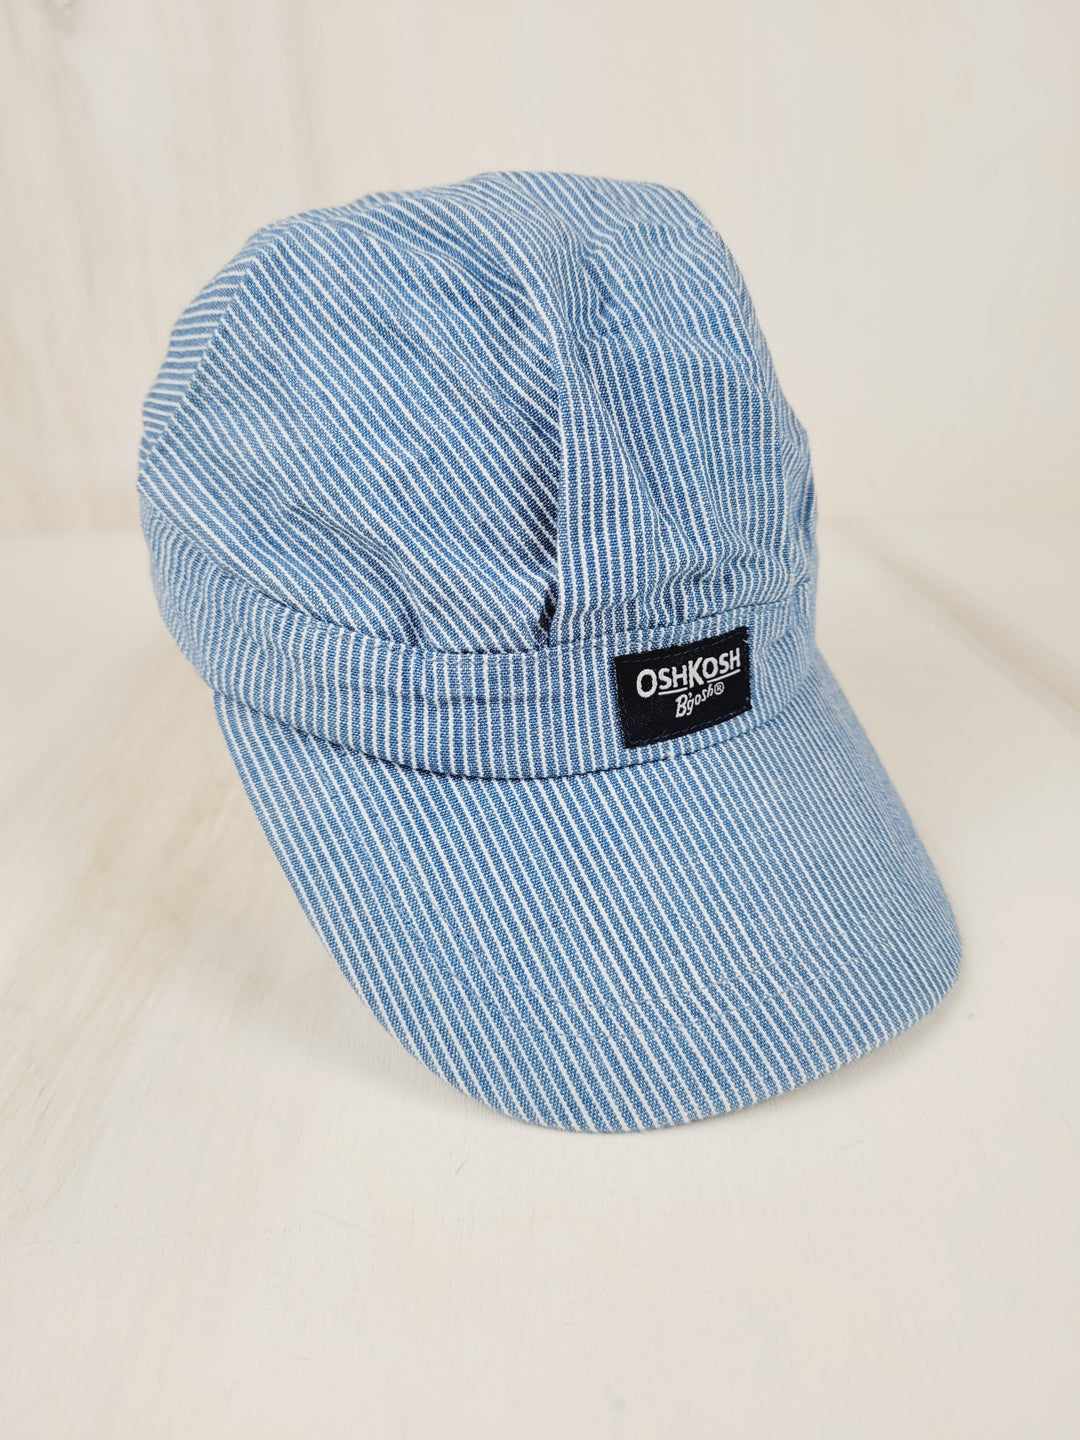 OSH KOSH BLUE STRIPED CAP 0-9M